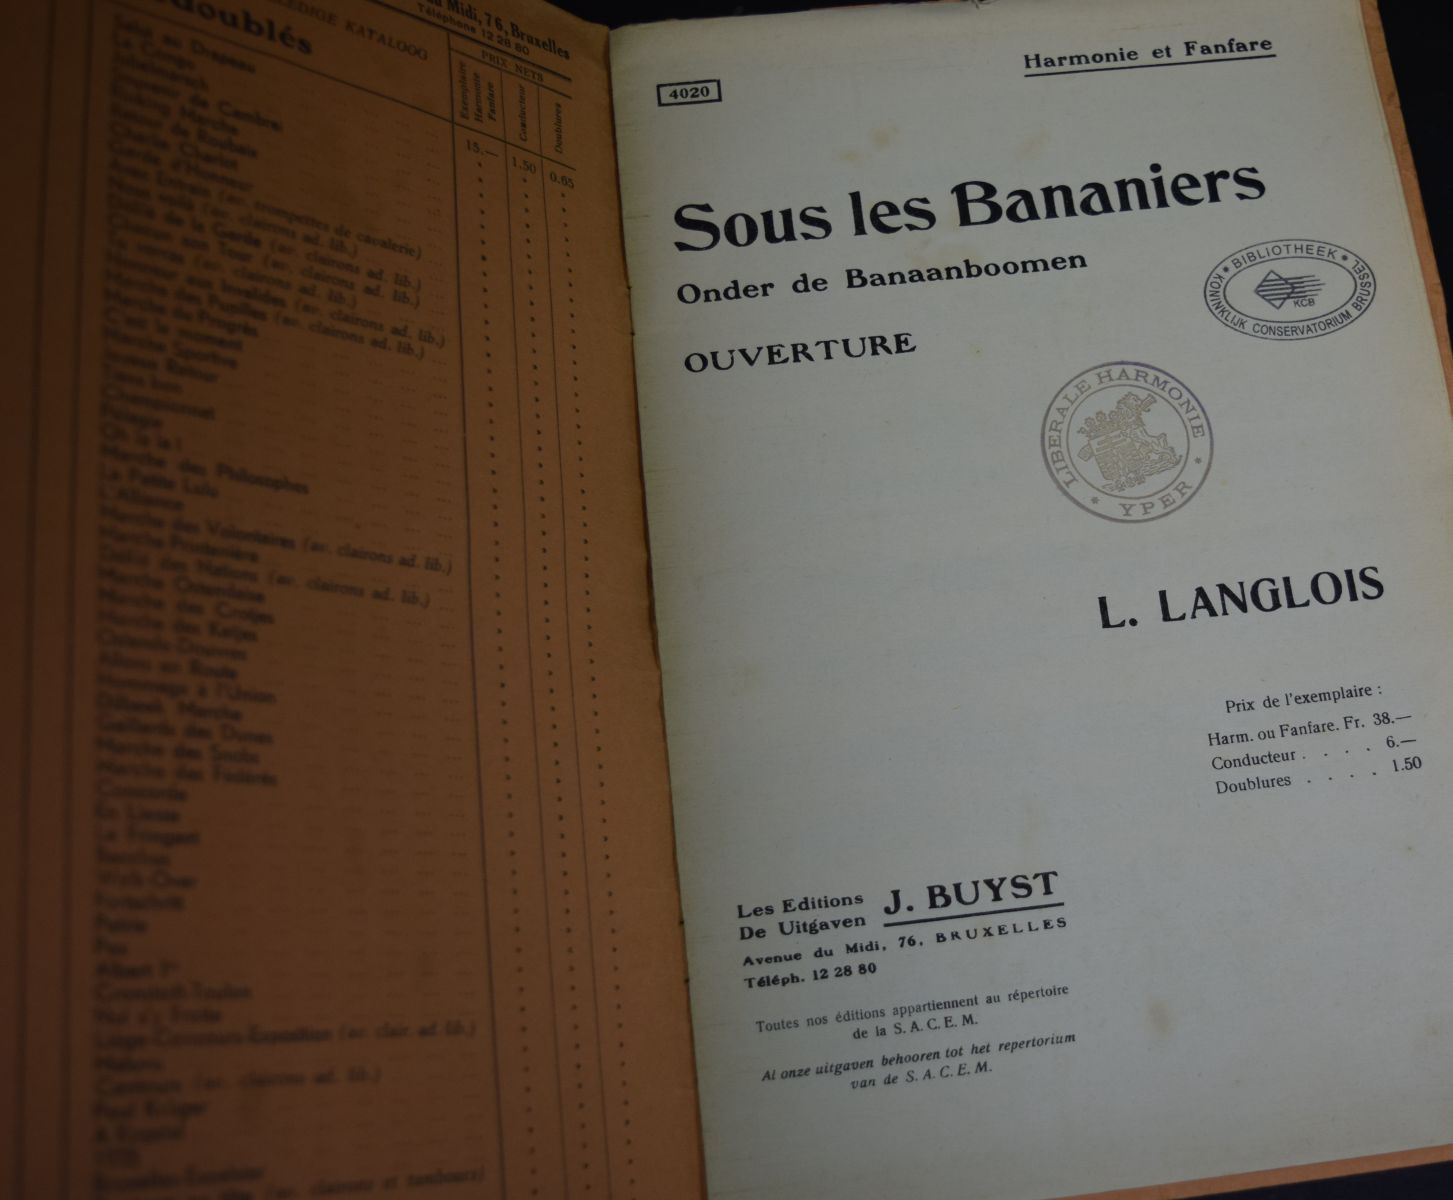 Sous les bananiers, een Brusselse uitgave met exotische titel. B-Bc E05311.